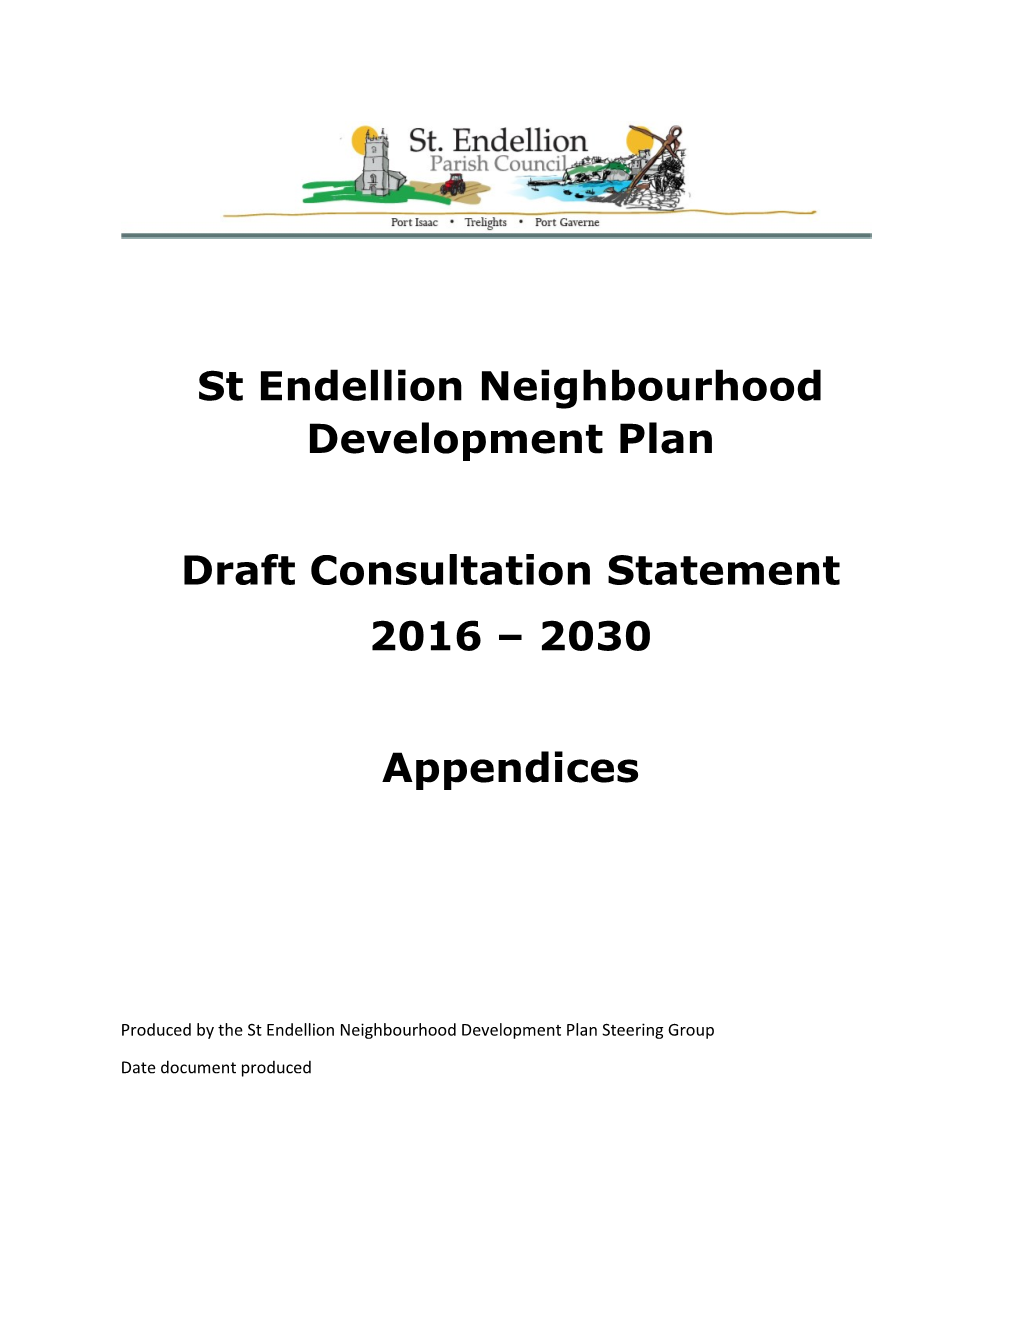 St Endellion Neighbourhood Development Plan Draft